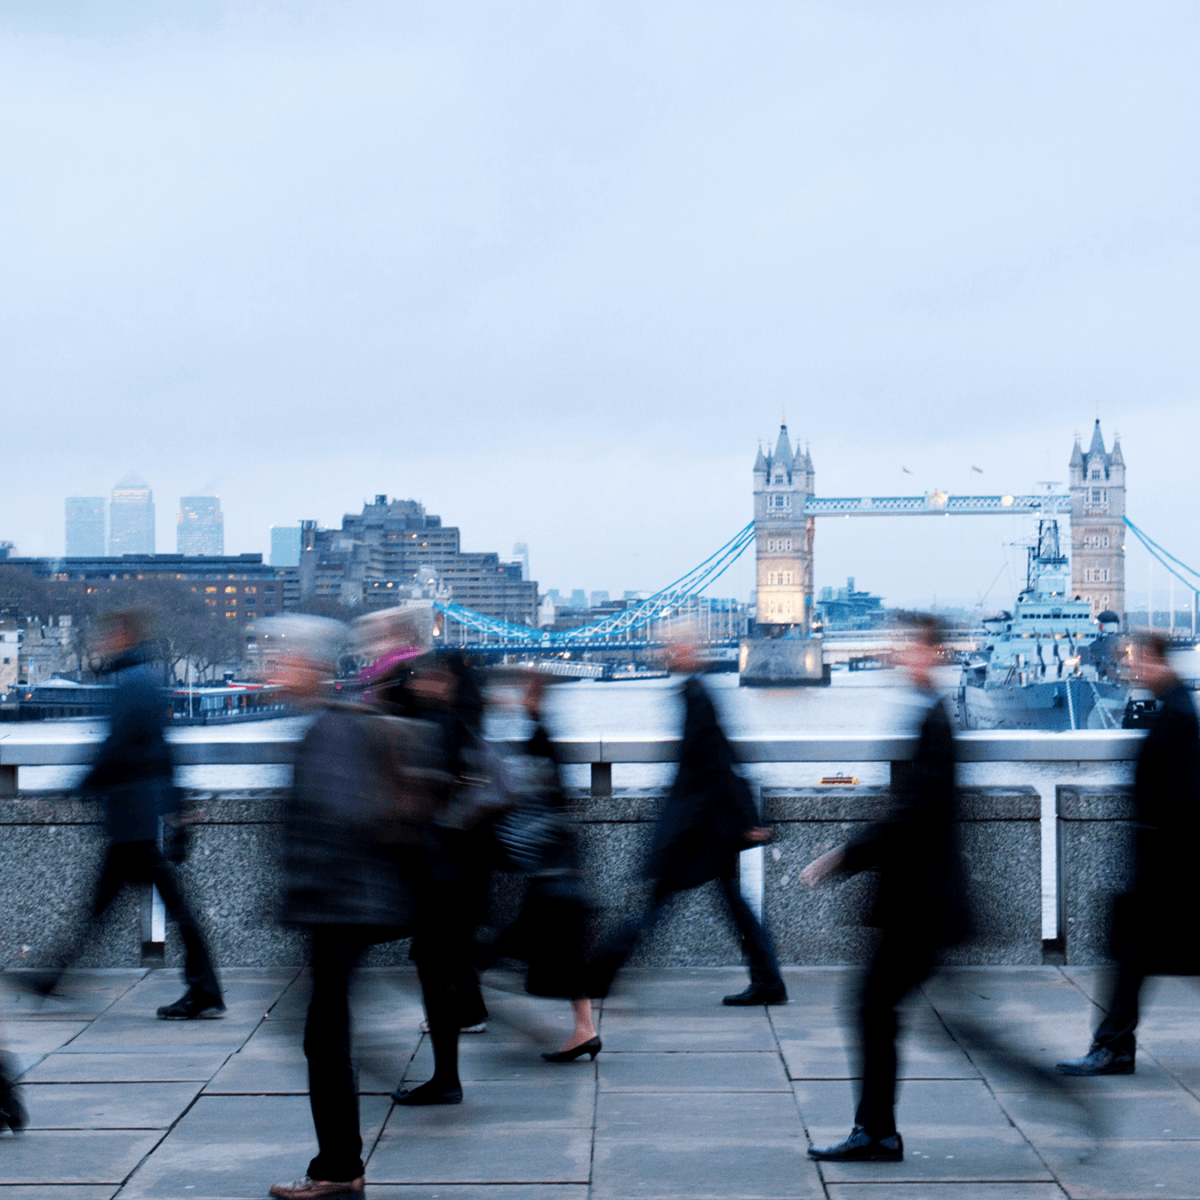 Commuters walking across London Bridge, with Tower Bridge in the background